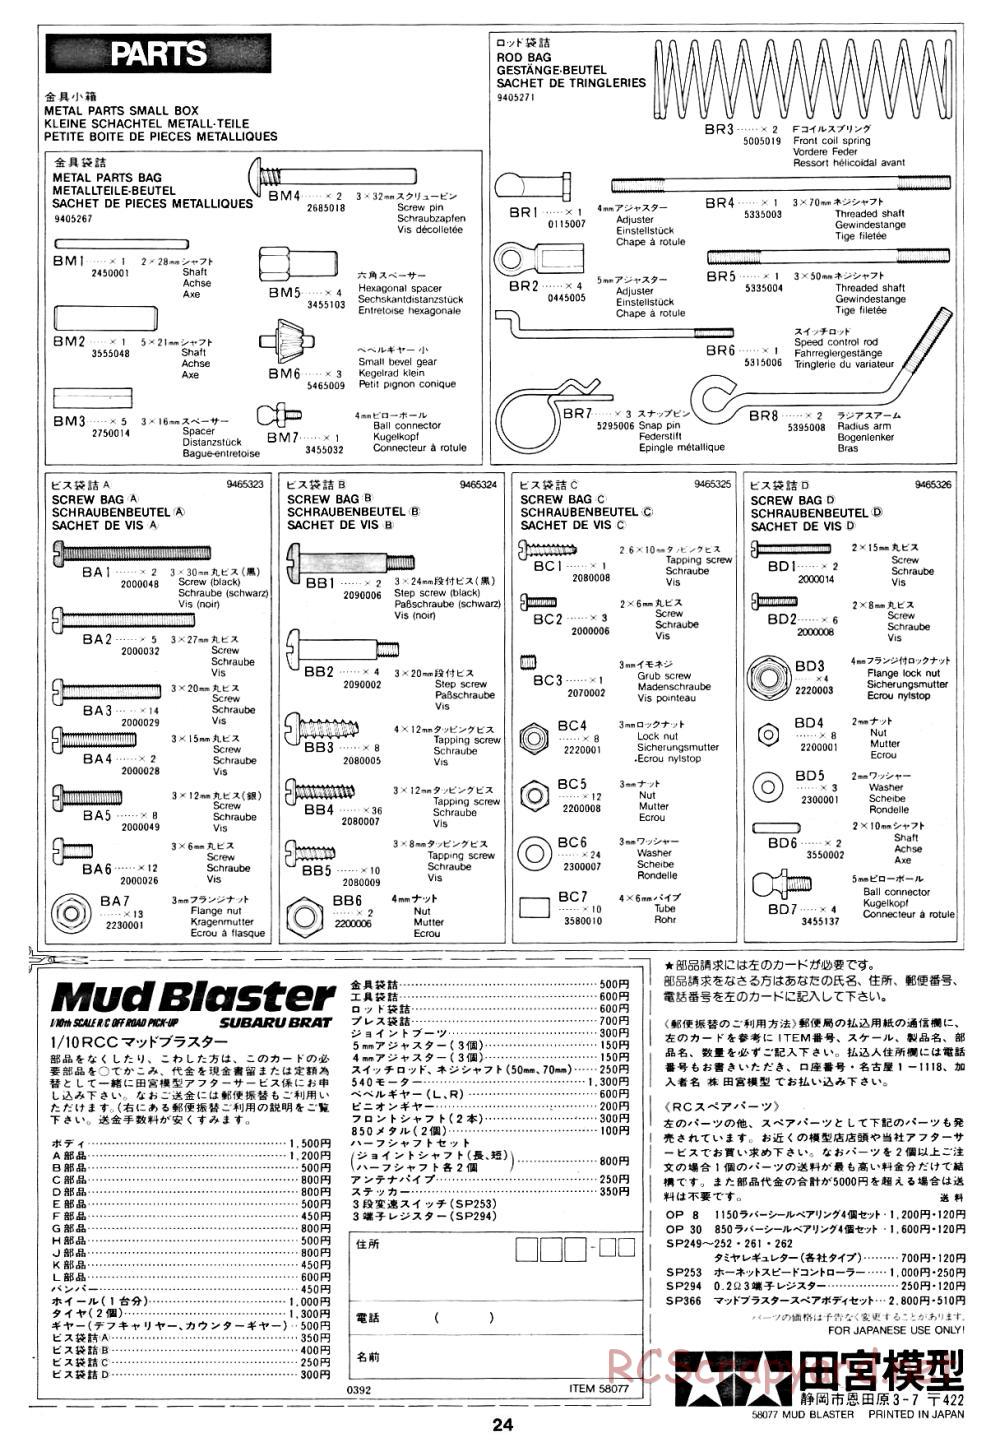 Tamiya - Mud Blaster - 58077 - Manual - Page 24